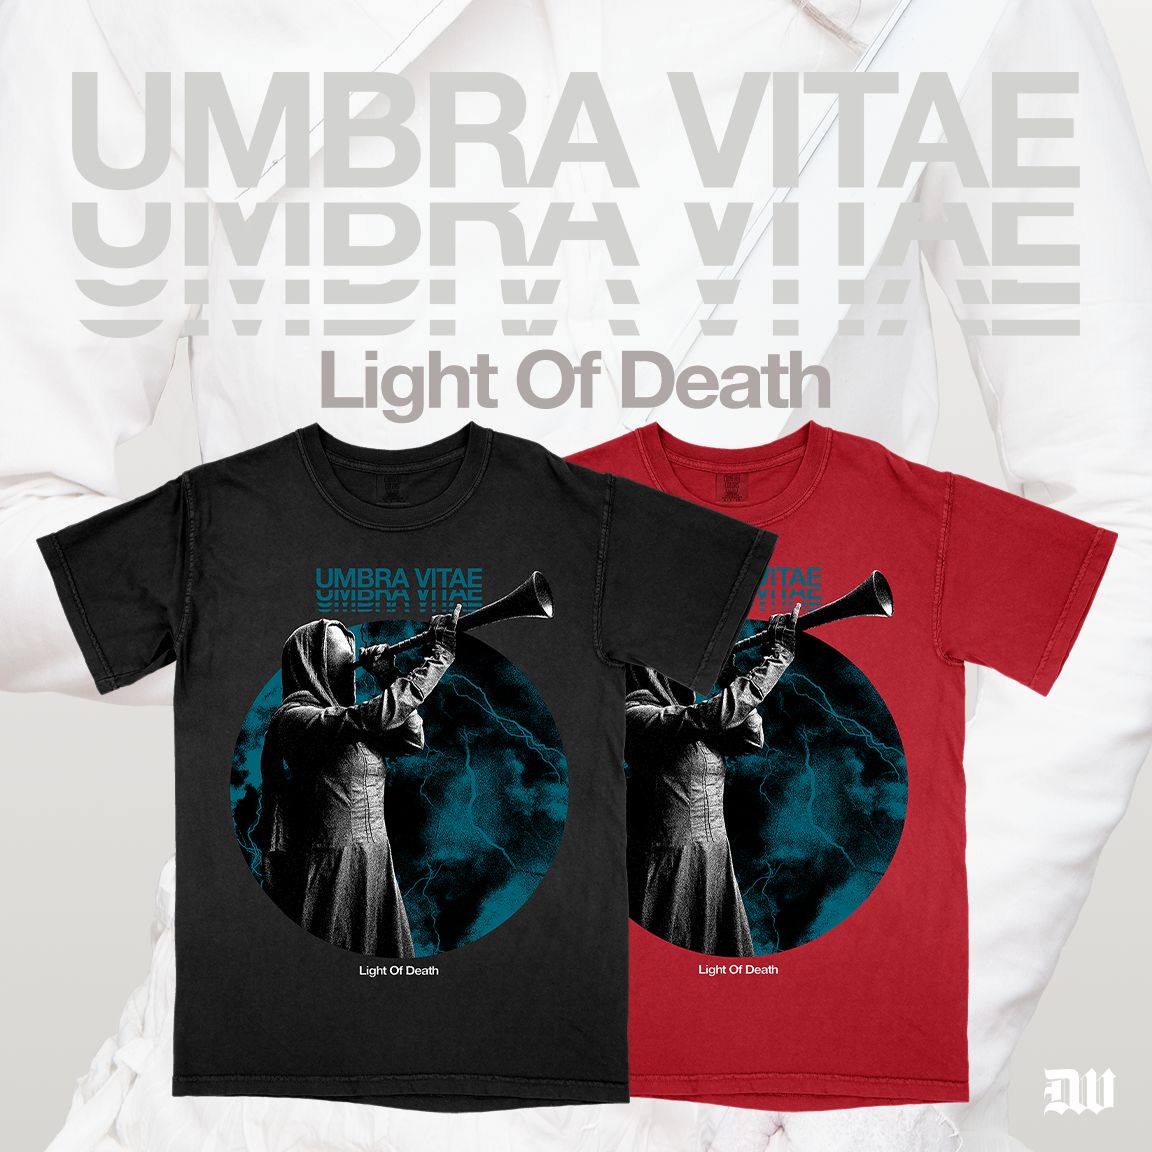 Umbra Vitae 'Light Of Death' out June 7th 🔪 Music & Merch: umbravitae.com Artwork/Photography by Juha Arvid Helminen Model: Regina Art Direction & Design by J. Bannon #UmbraVitae #LightOfDeath #DeathwishInc #DeathwishEurope